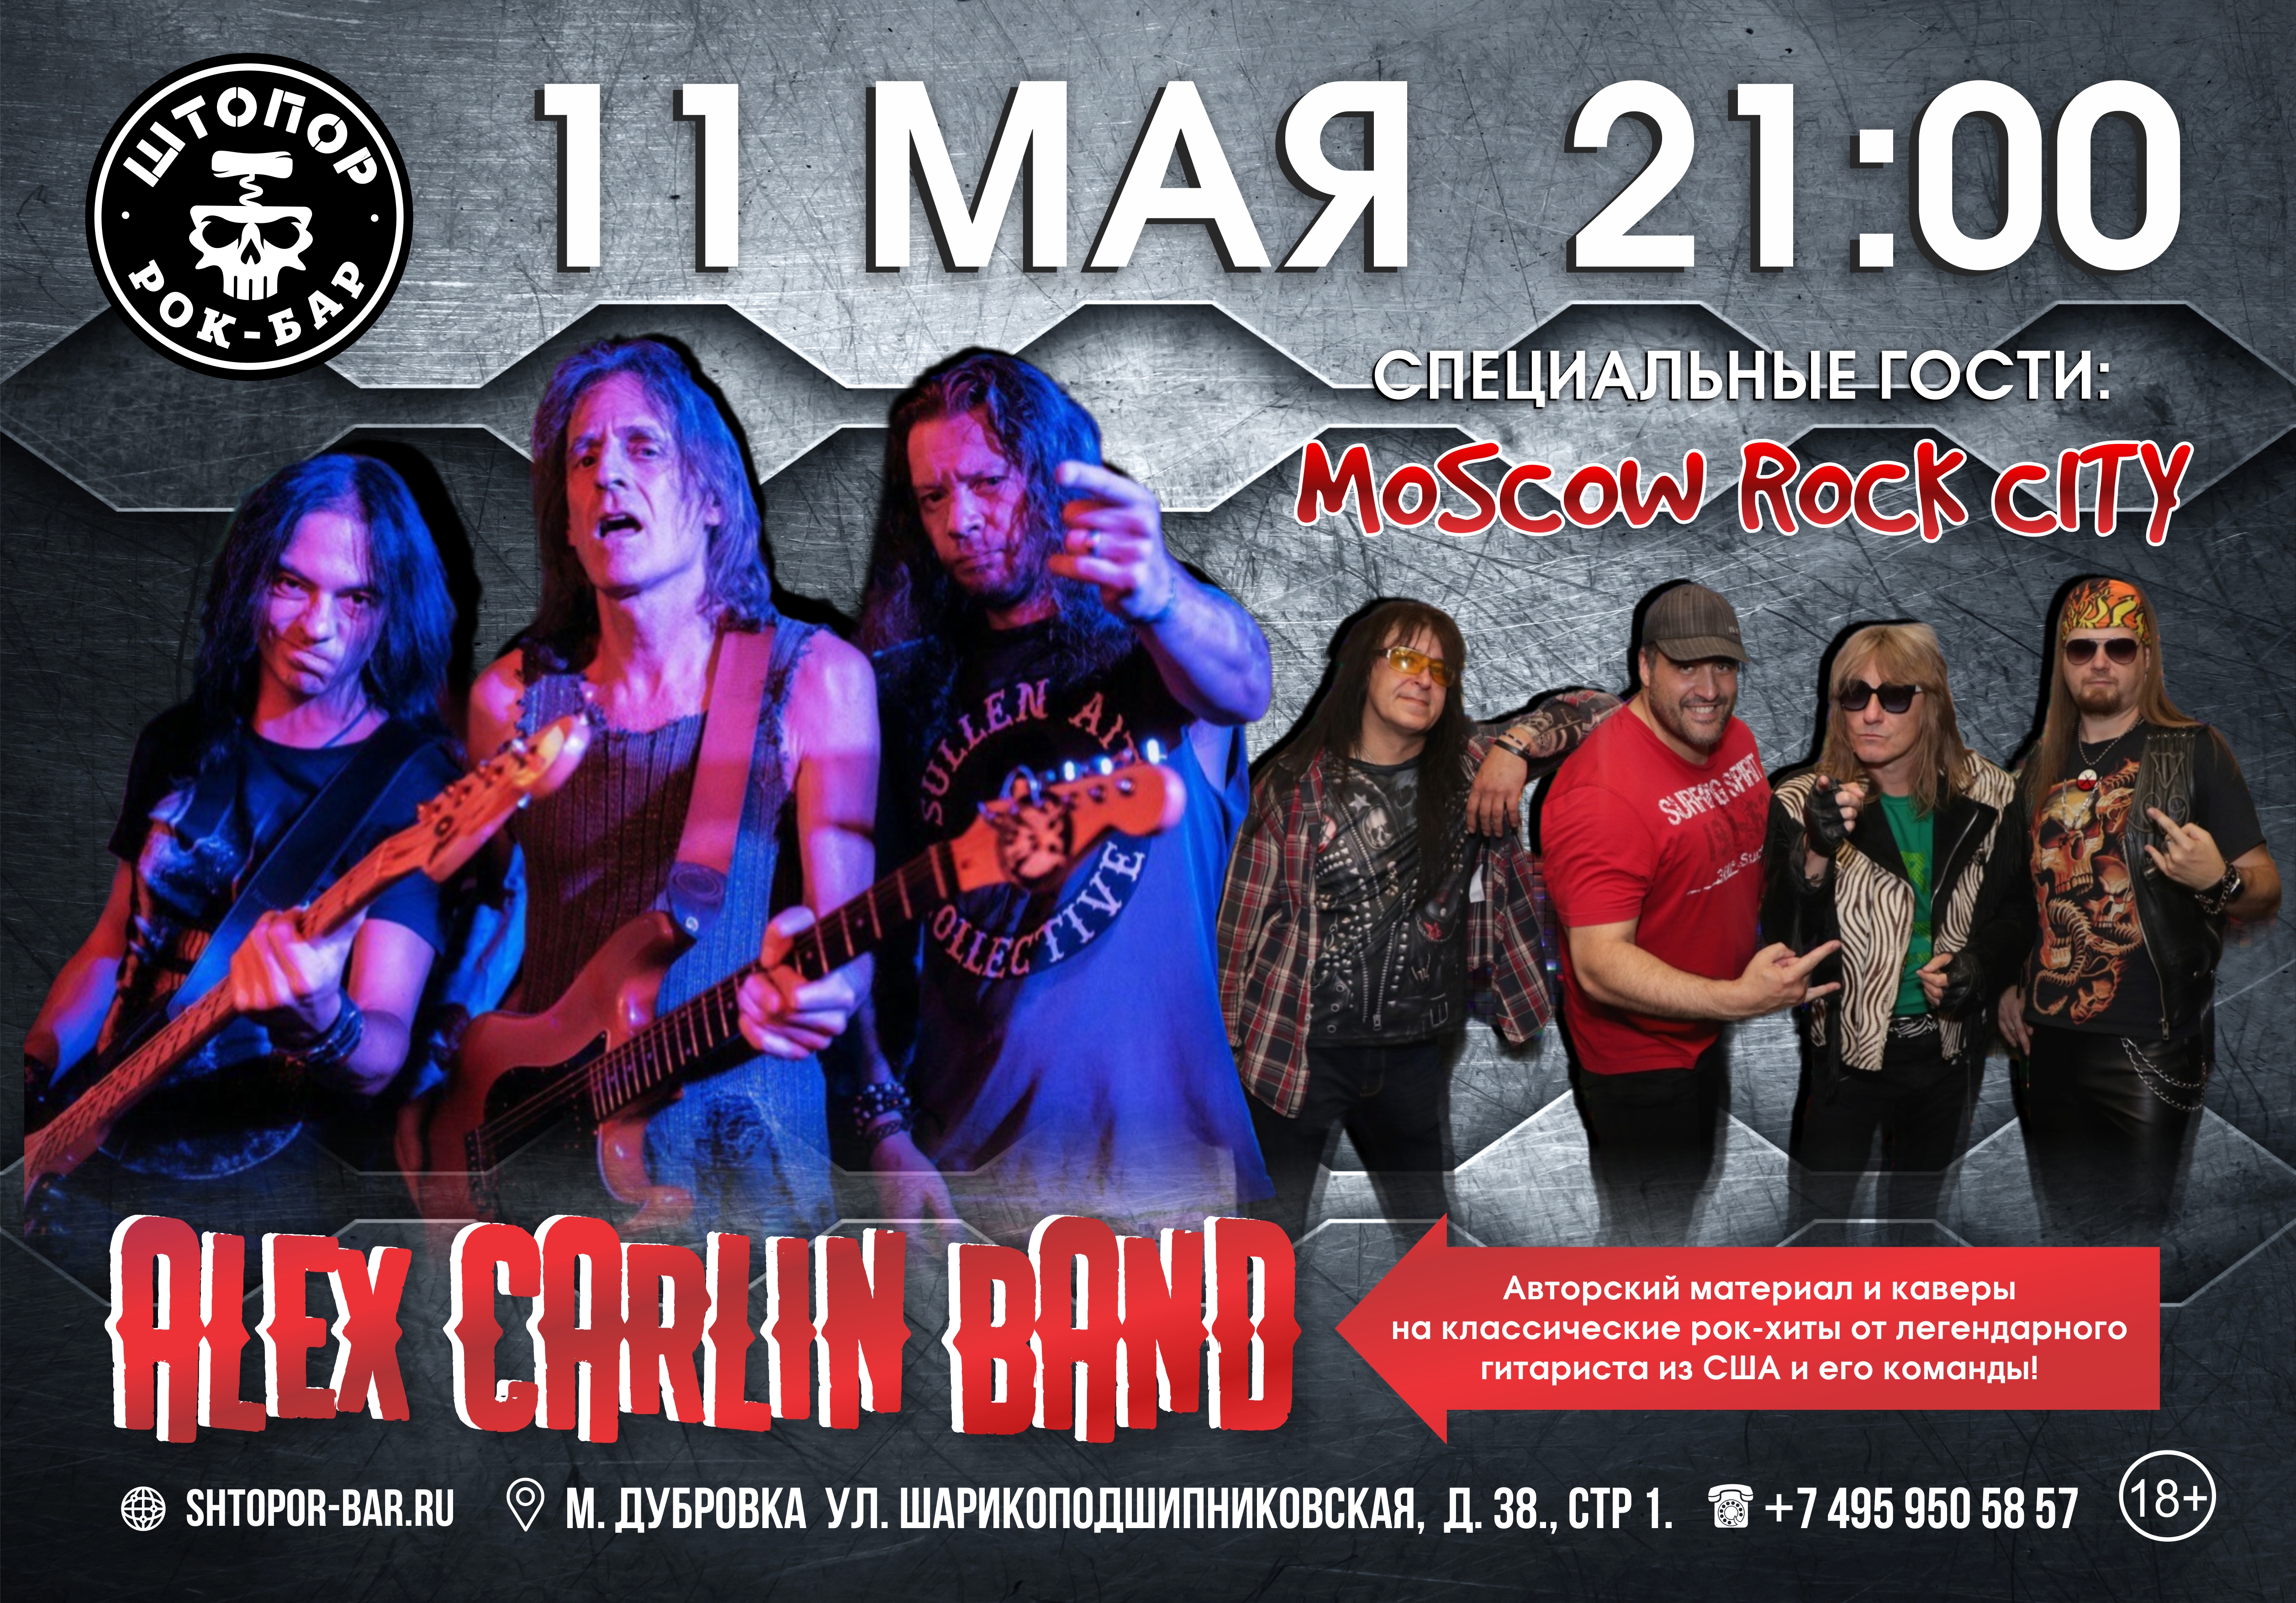 Alex Carlin Band & Moscow Rock City!